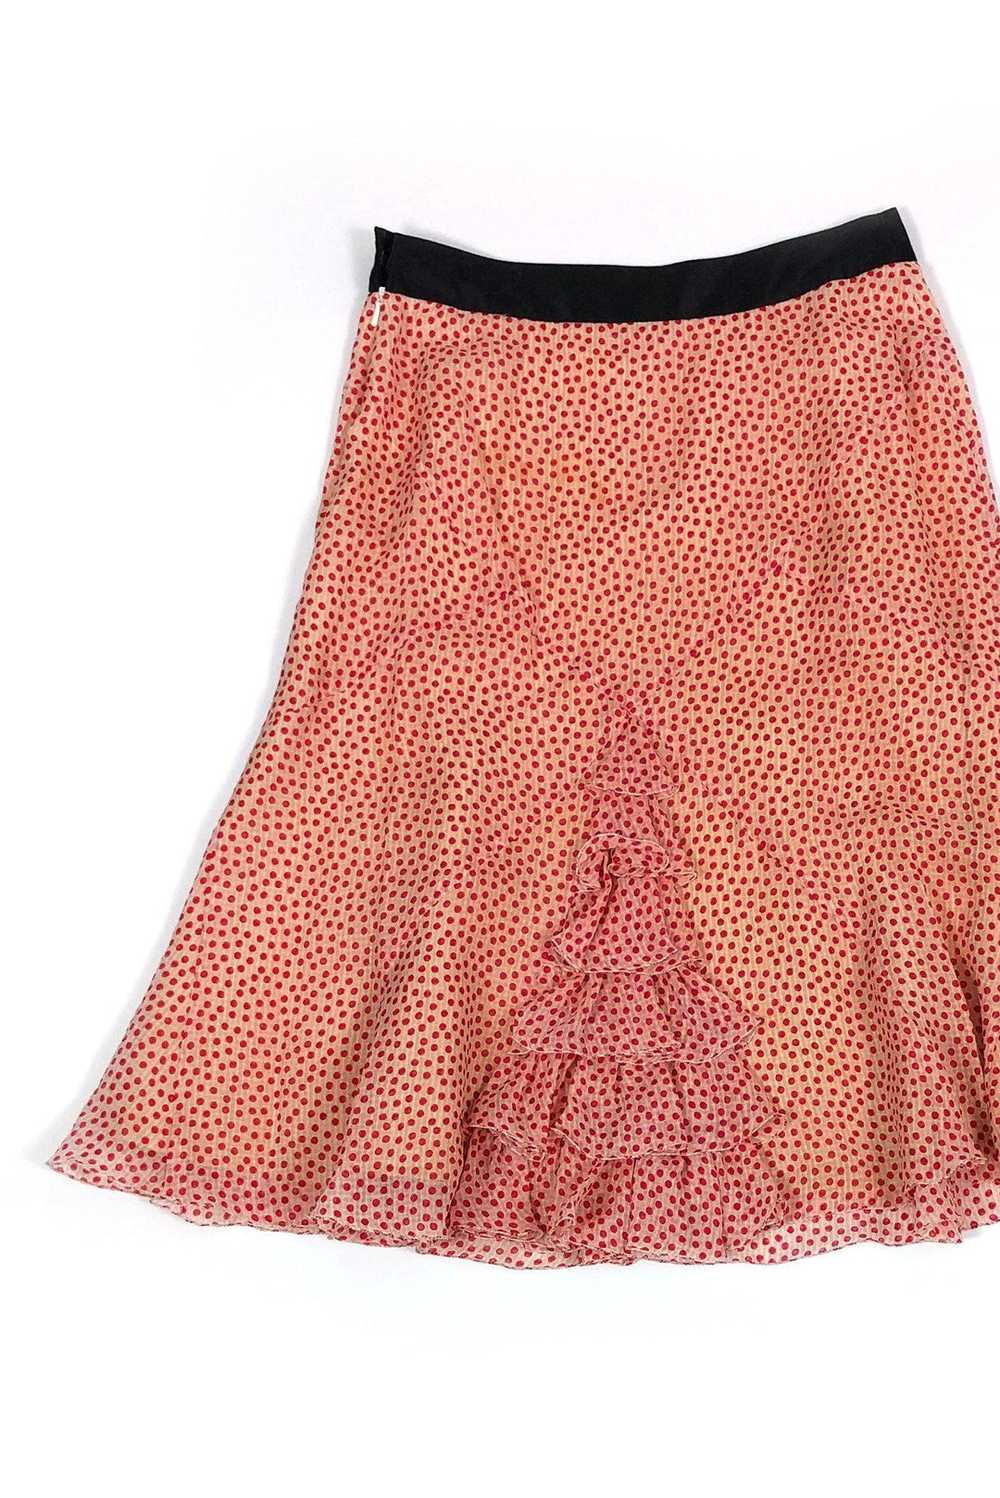 Marc Jacobs - Red Polka Dot Silk Skirt Sz 2 - image 2